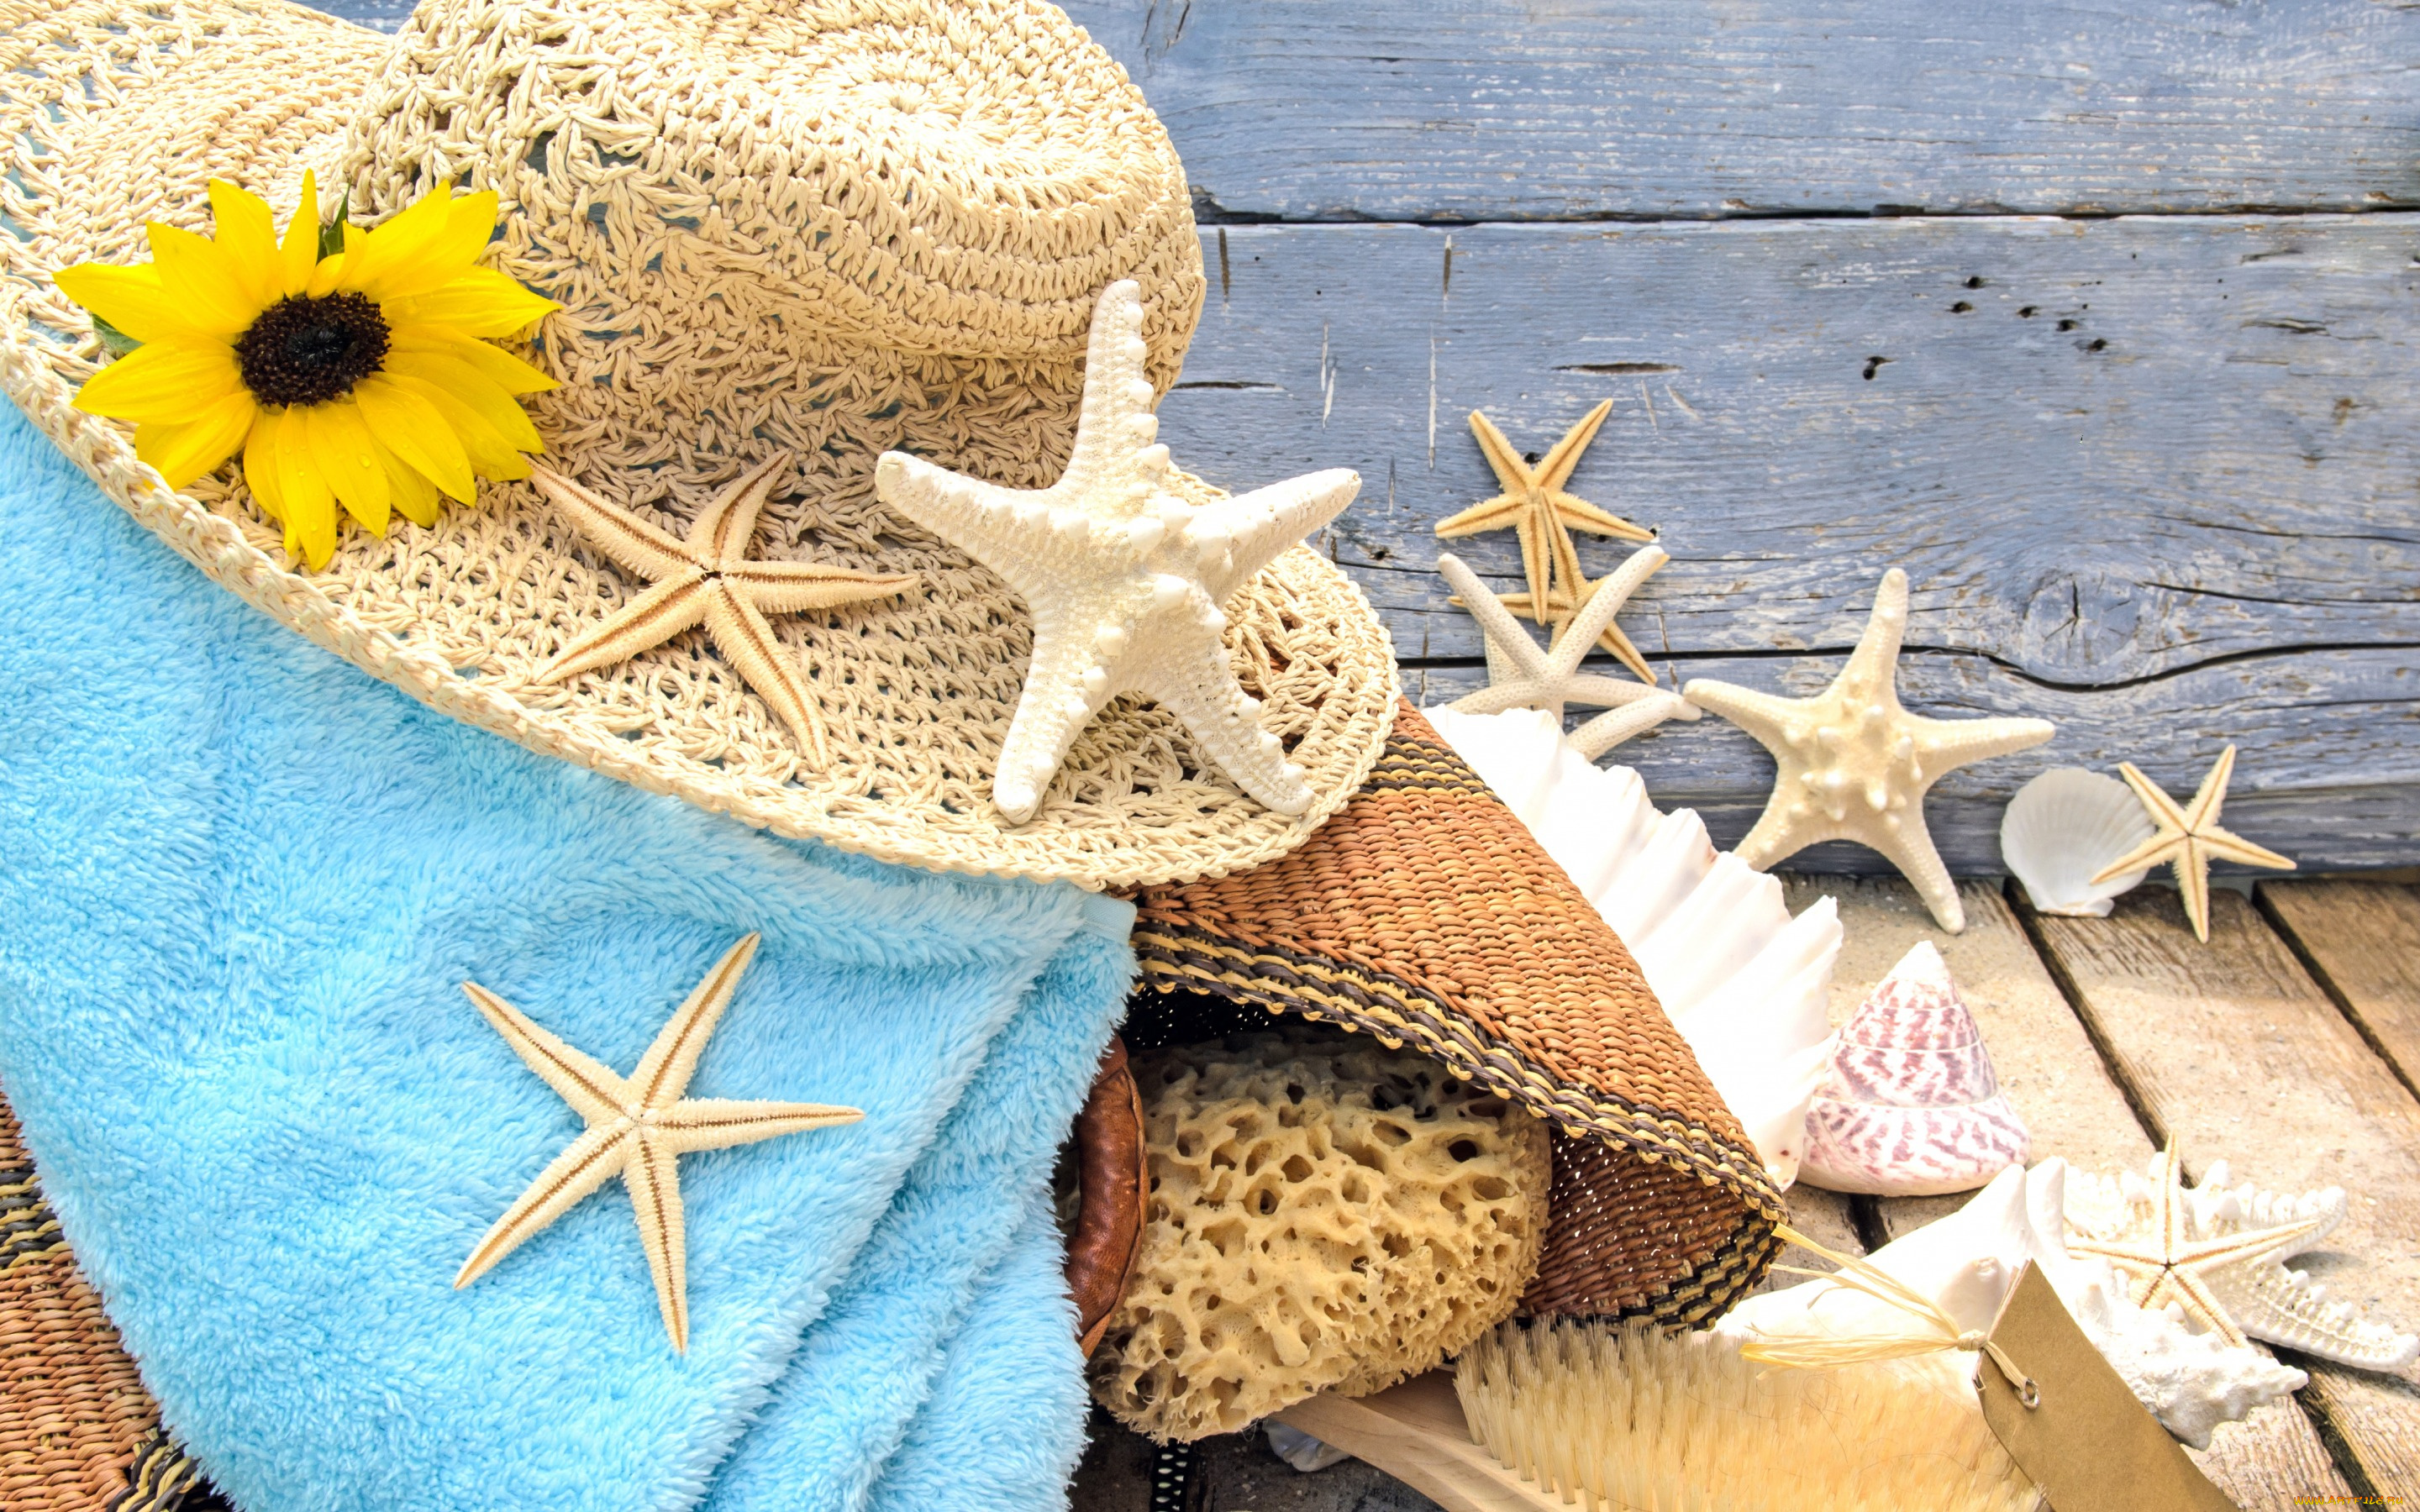 разное, ракушки, , кораллы, , декоративные, и, spa-камни, wood, beach, sand, песок, шляпа, аксессуары, starfishes, seashells, пляж, звезды